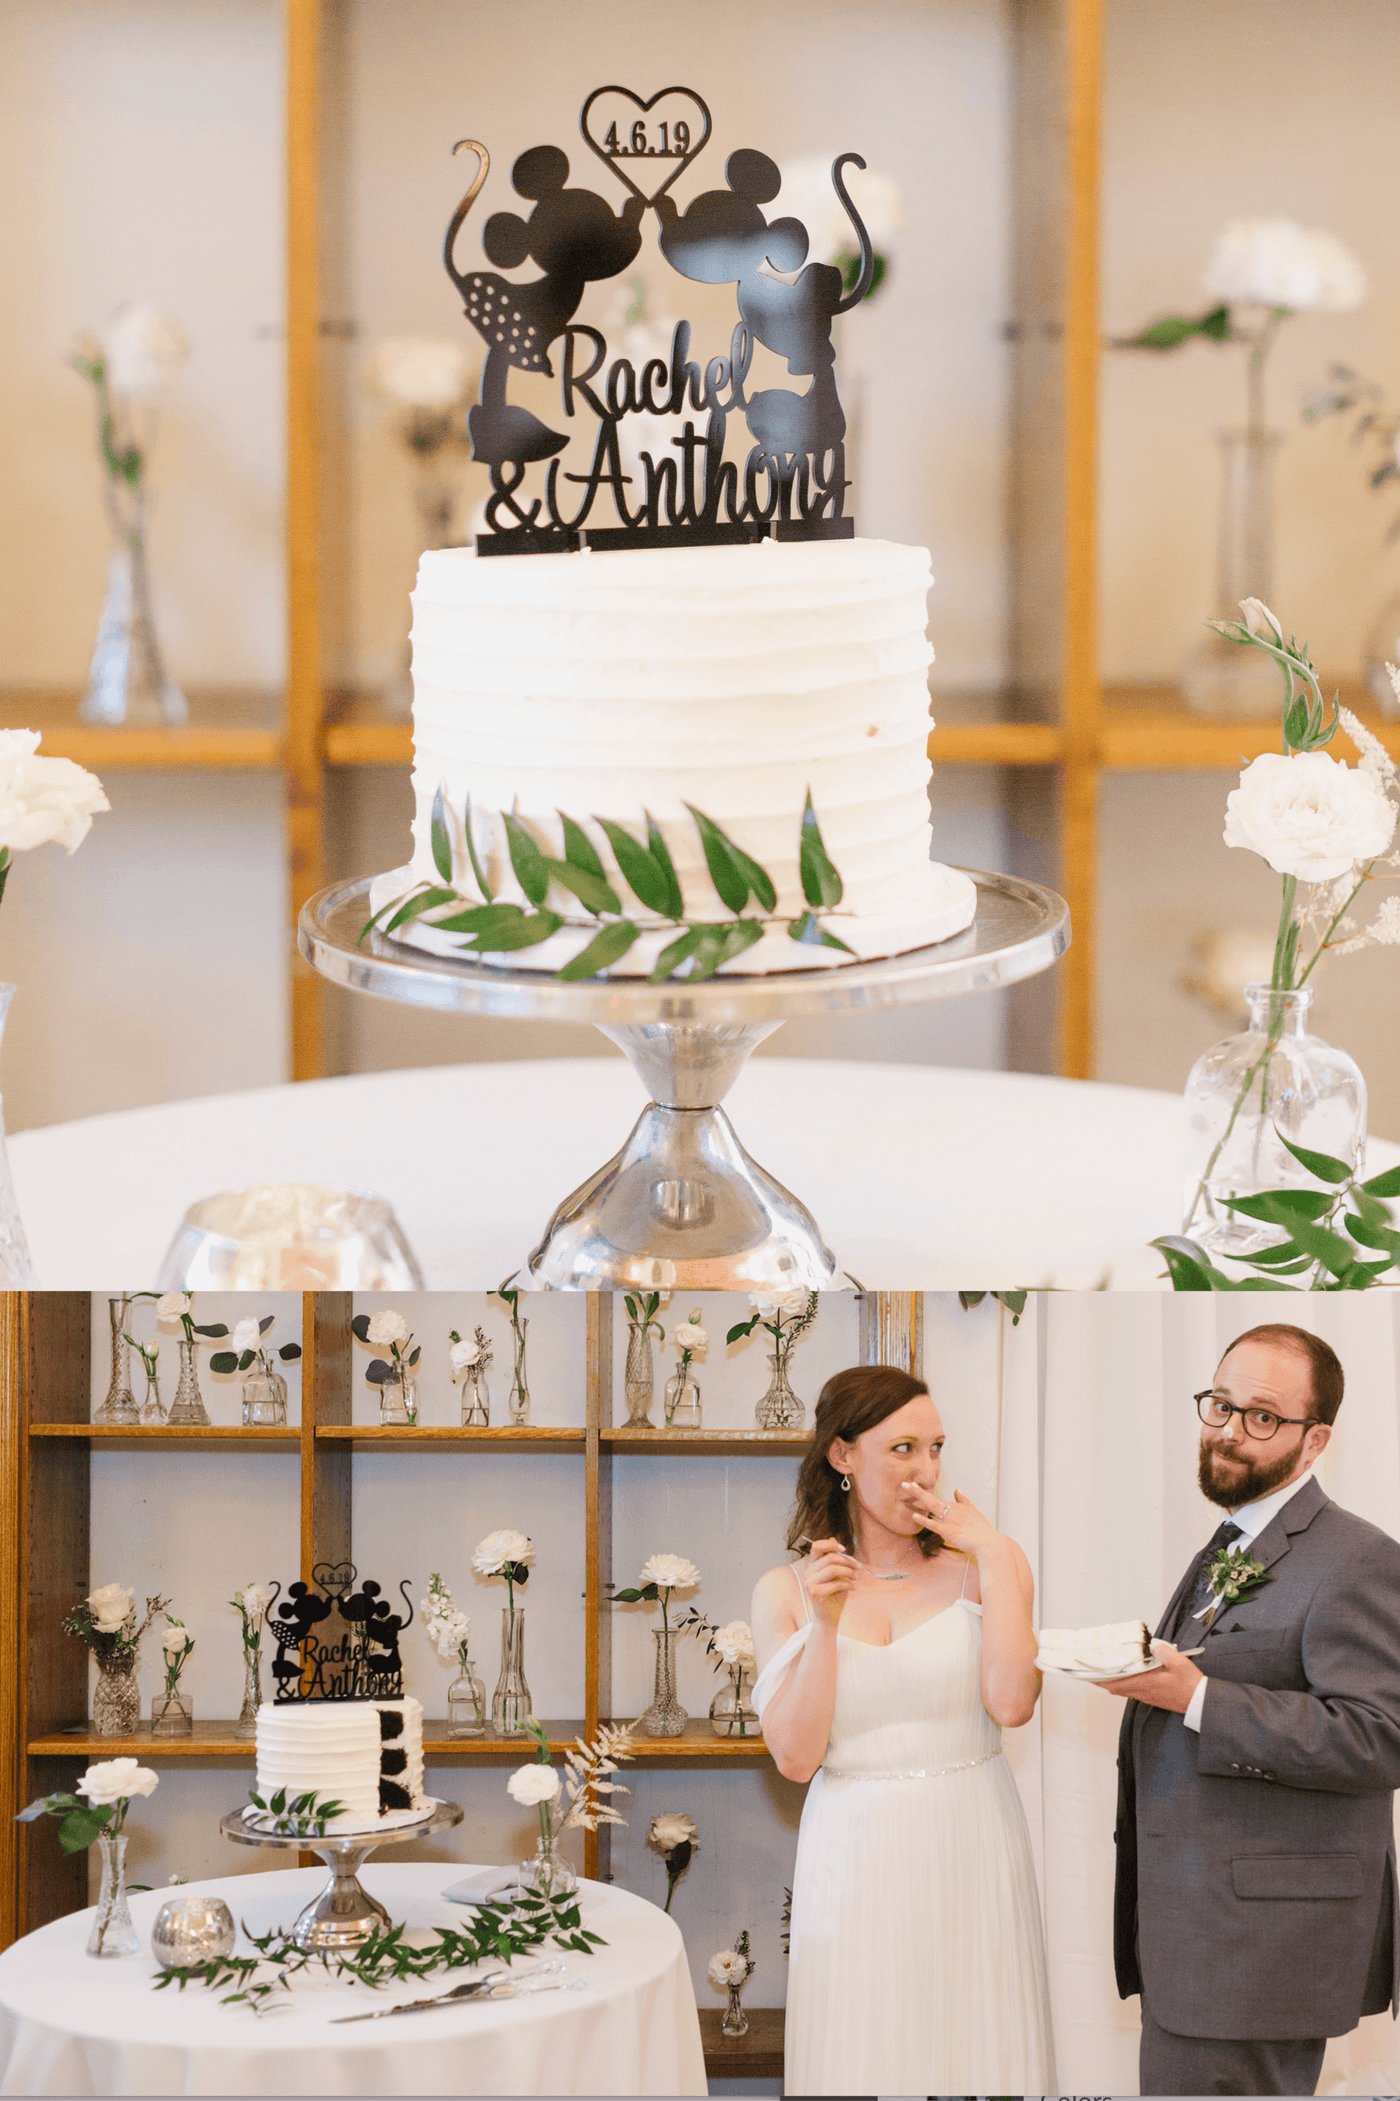 Rachel Anthony Wedding - Sweet E's Bake Shop